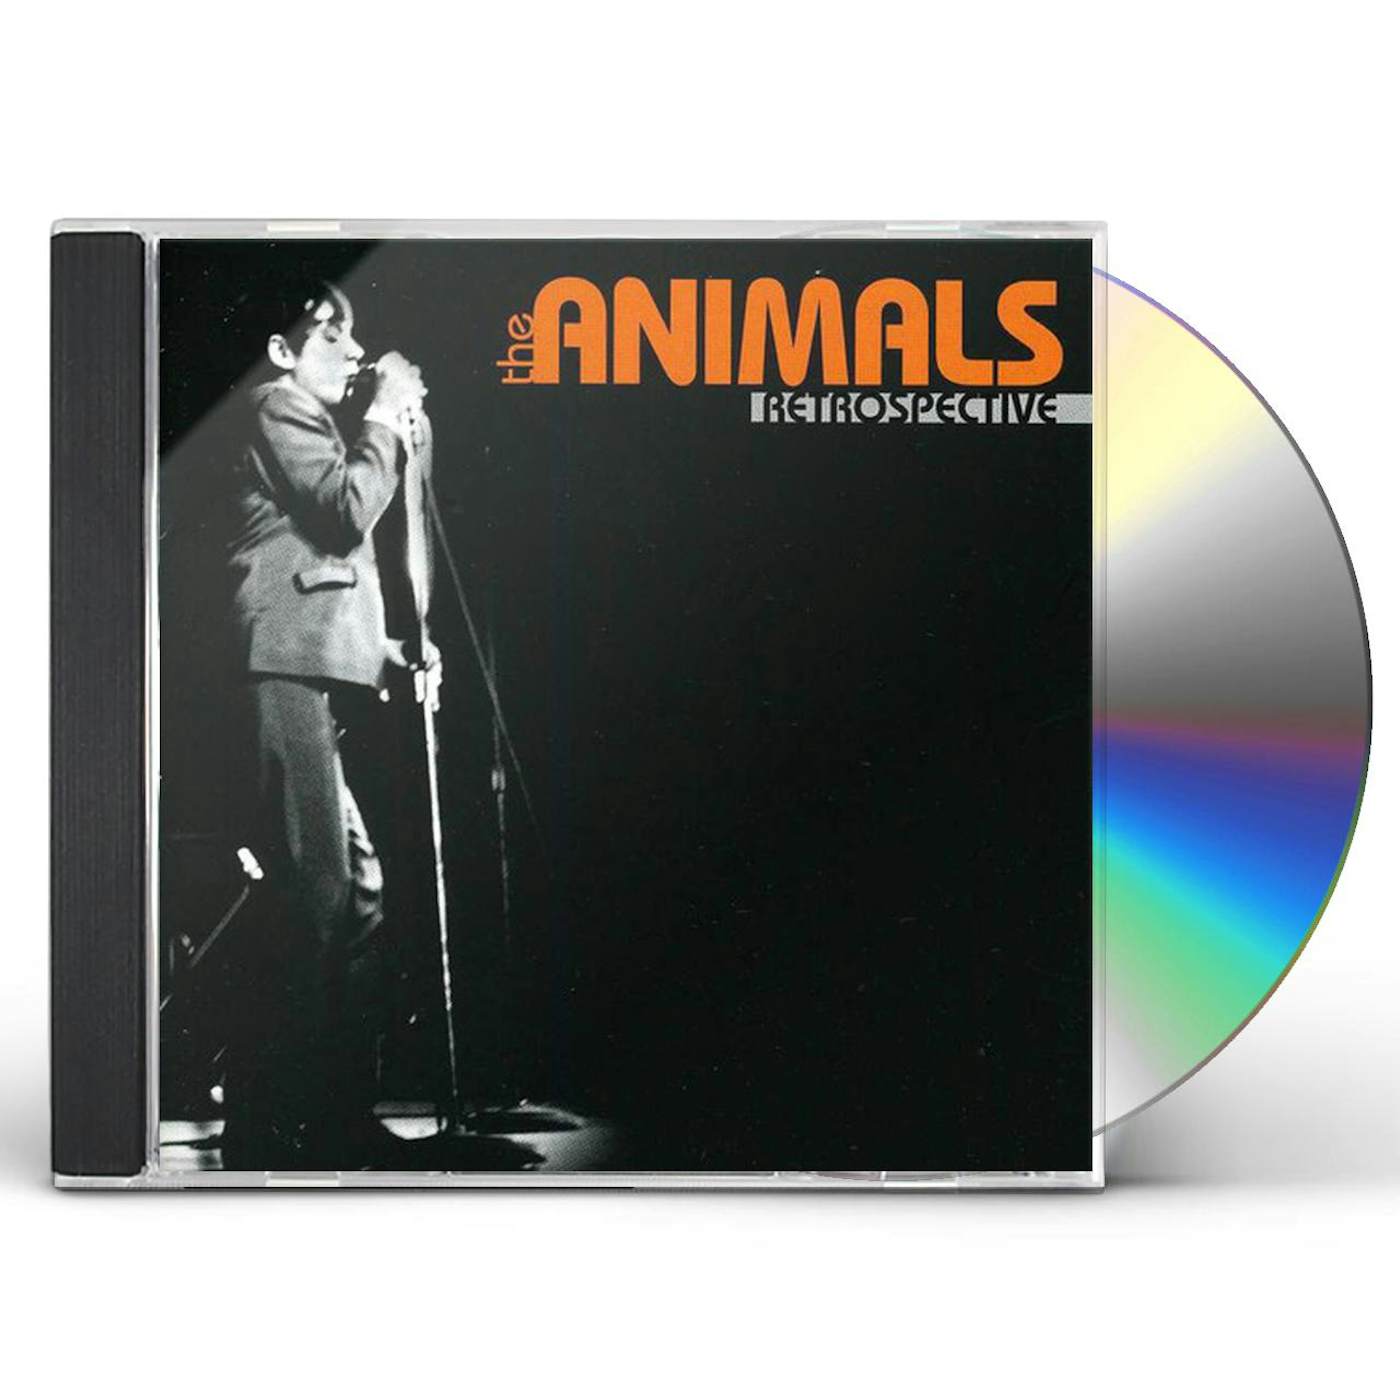 The Animals RETROSPECTIVE CD